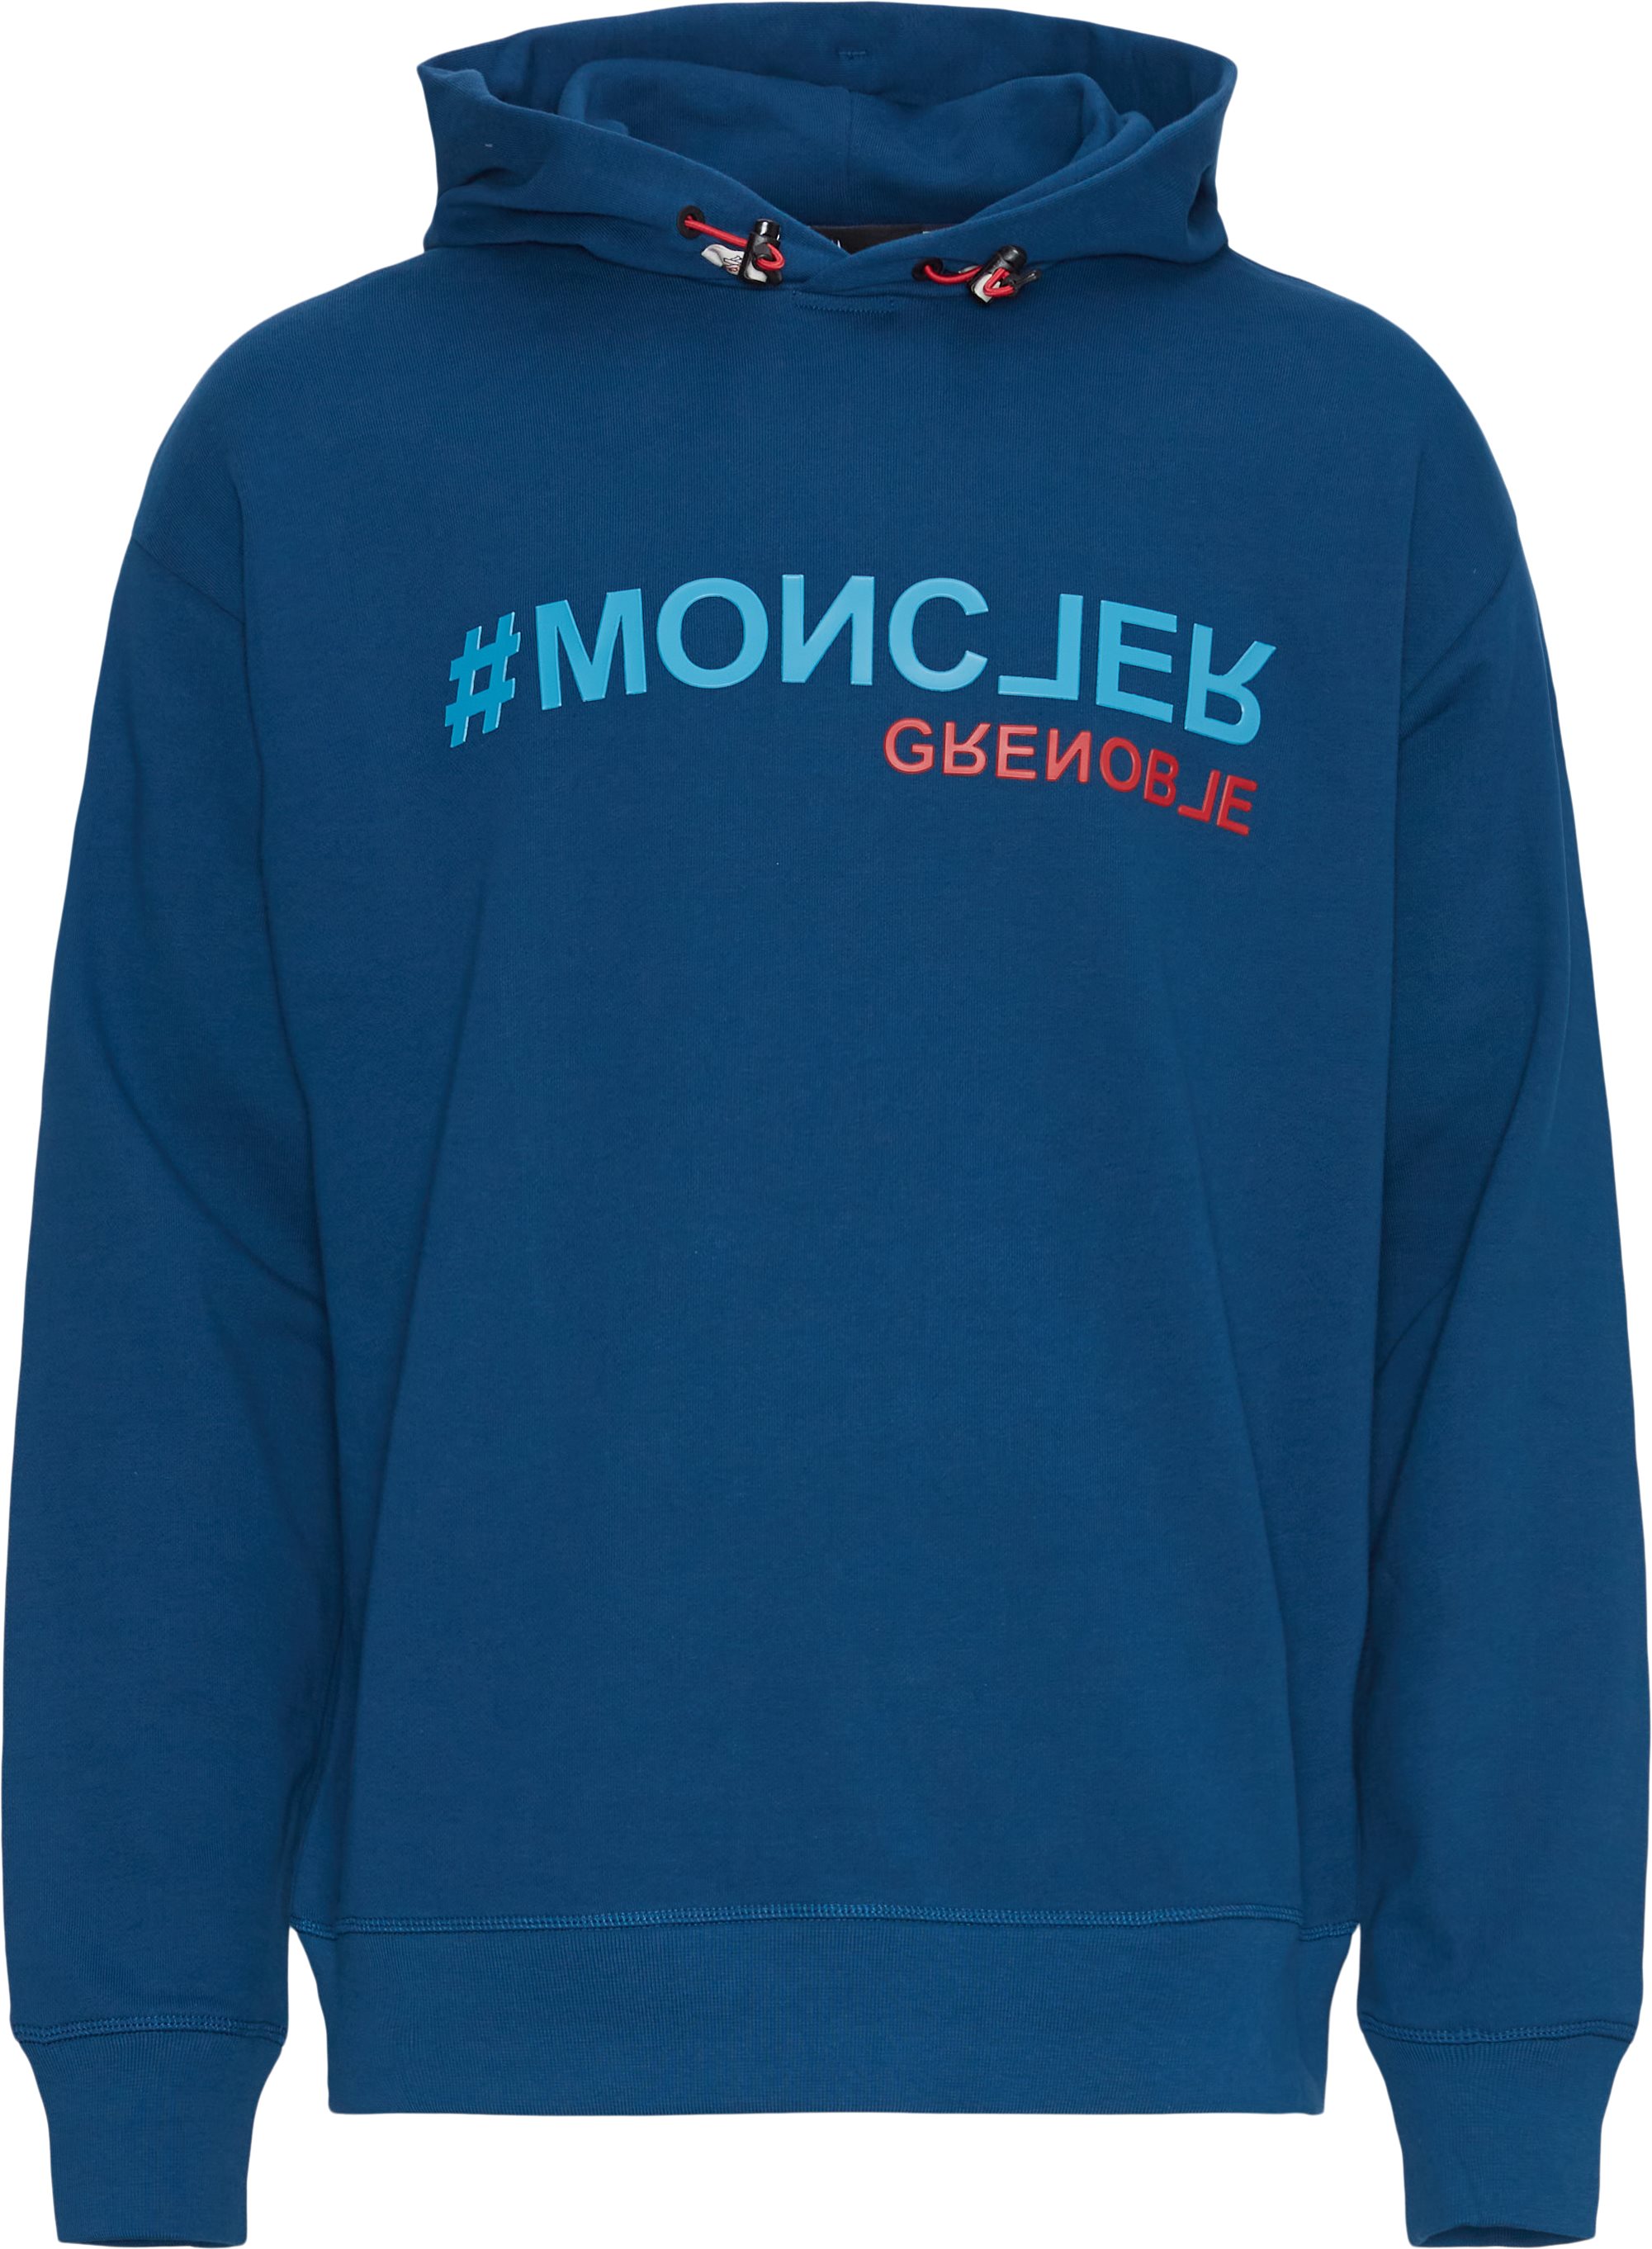 Moncler Grenoble Sweatshirts 8G00010 8098U Blue